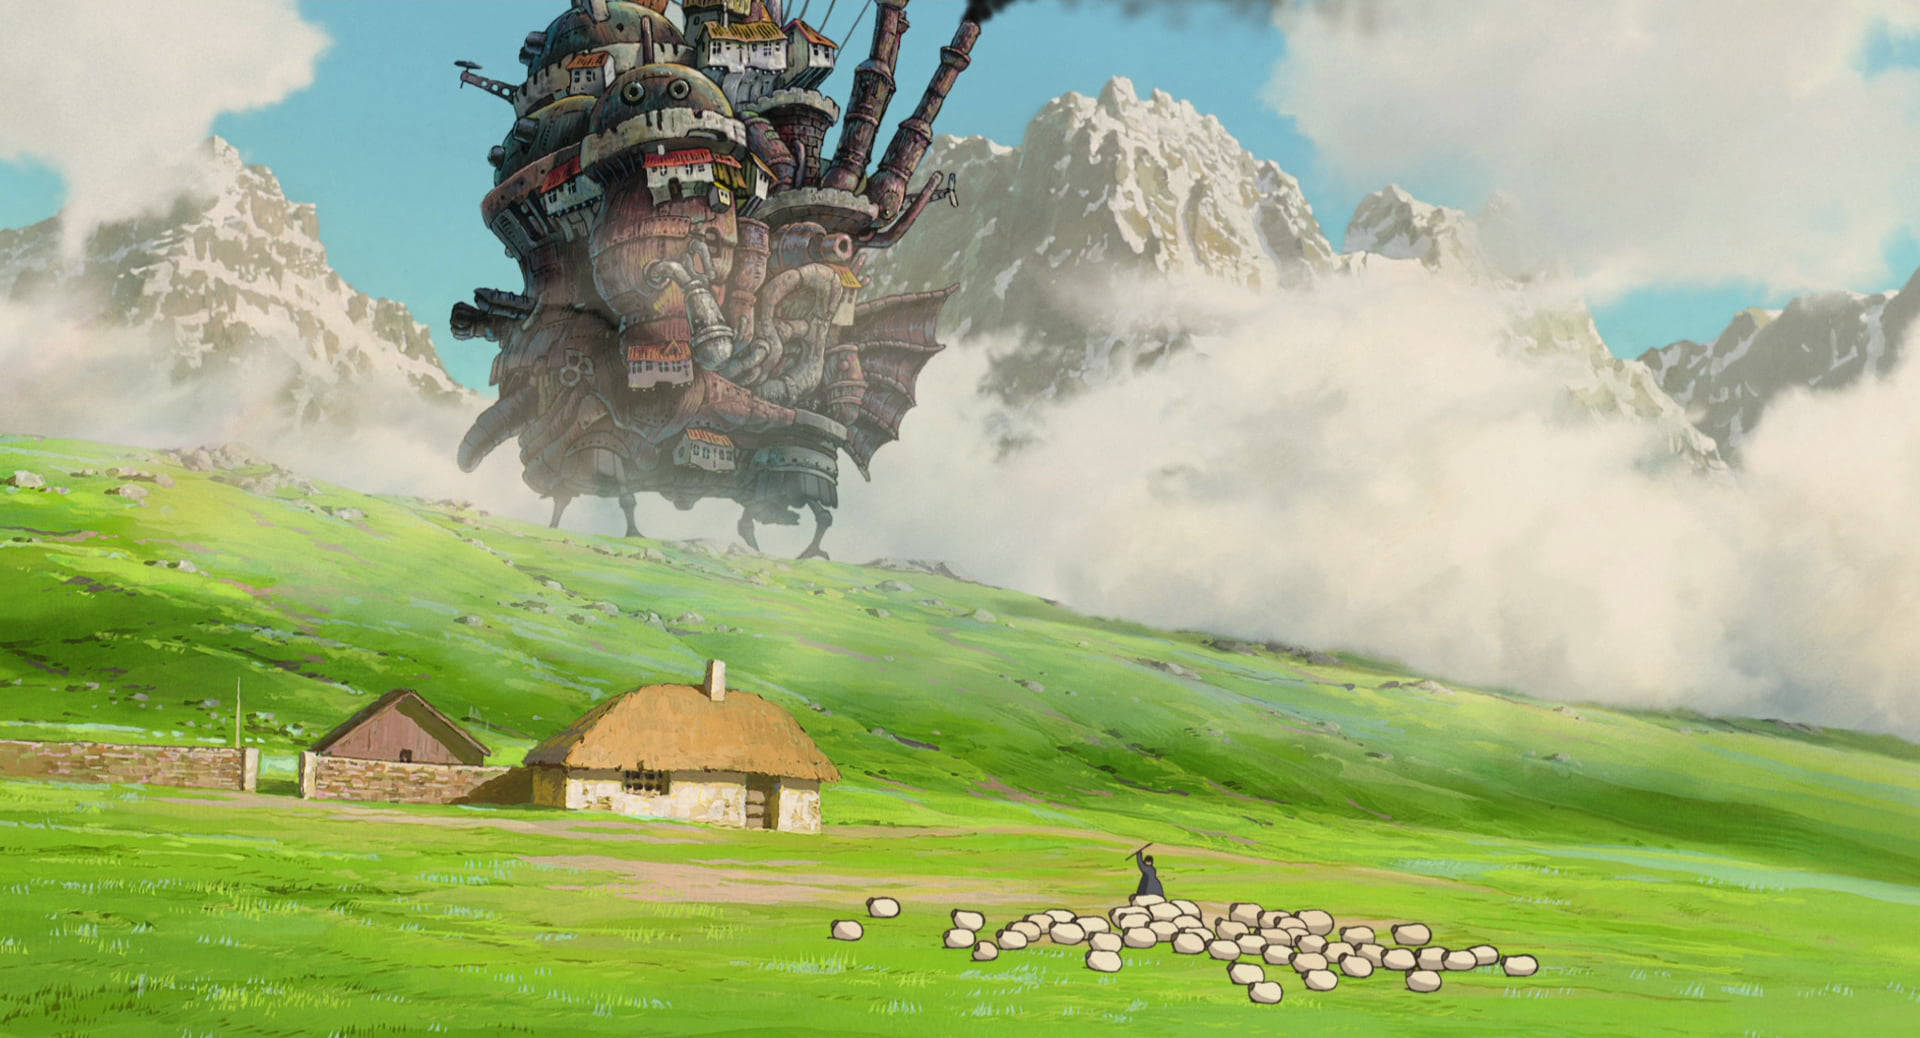 Studio Ghibli Scenery Of Sheep On Farm Background